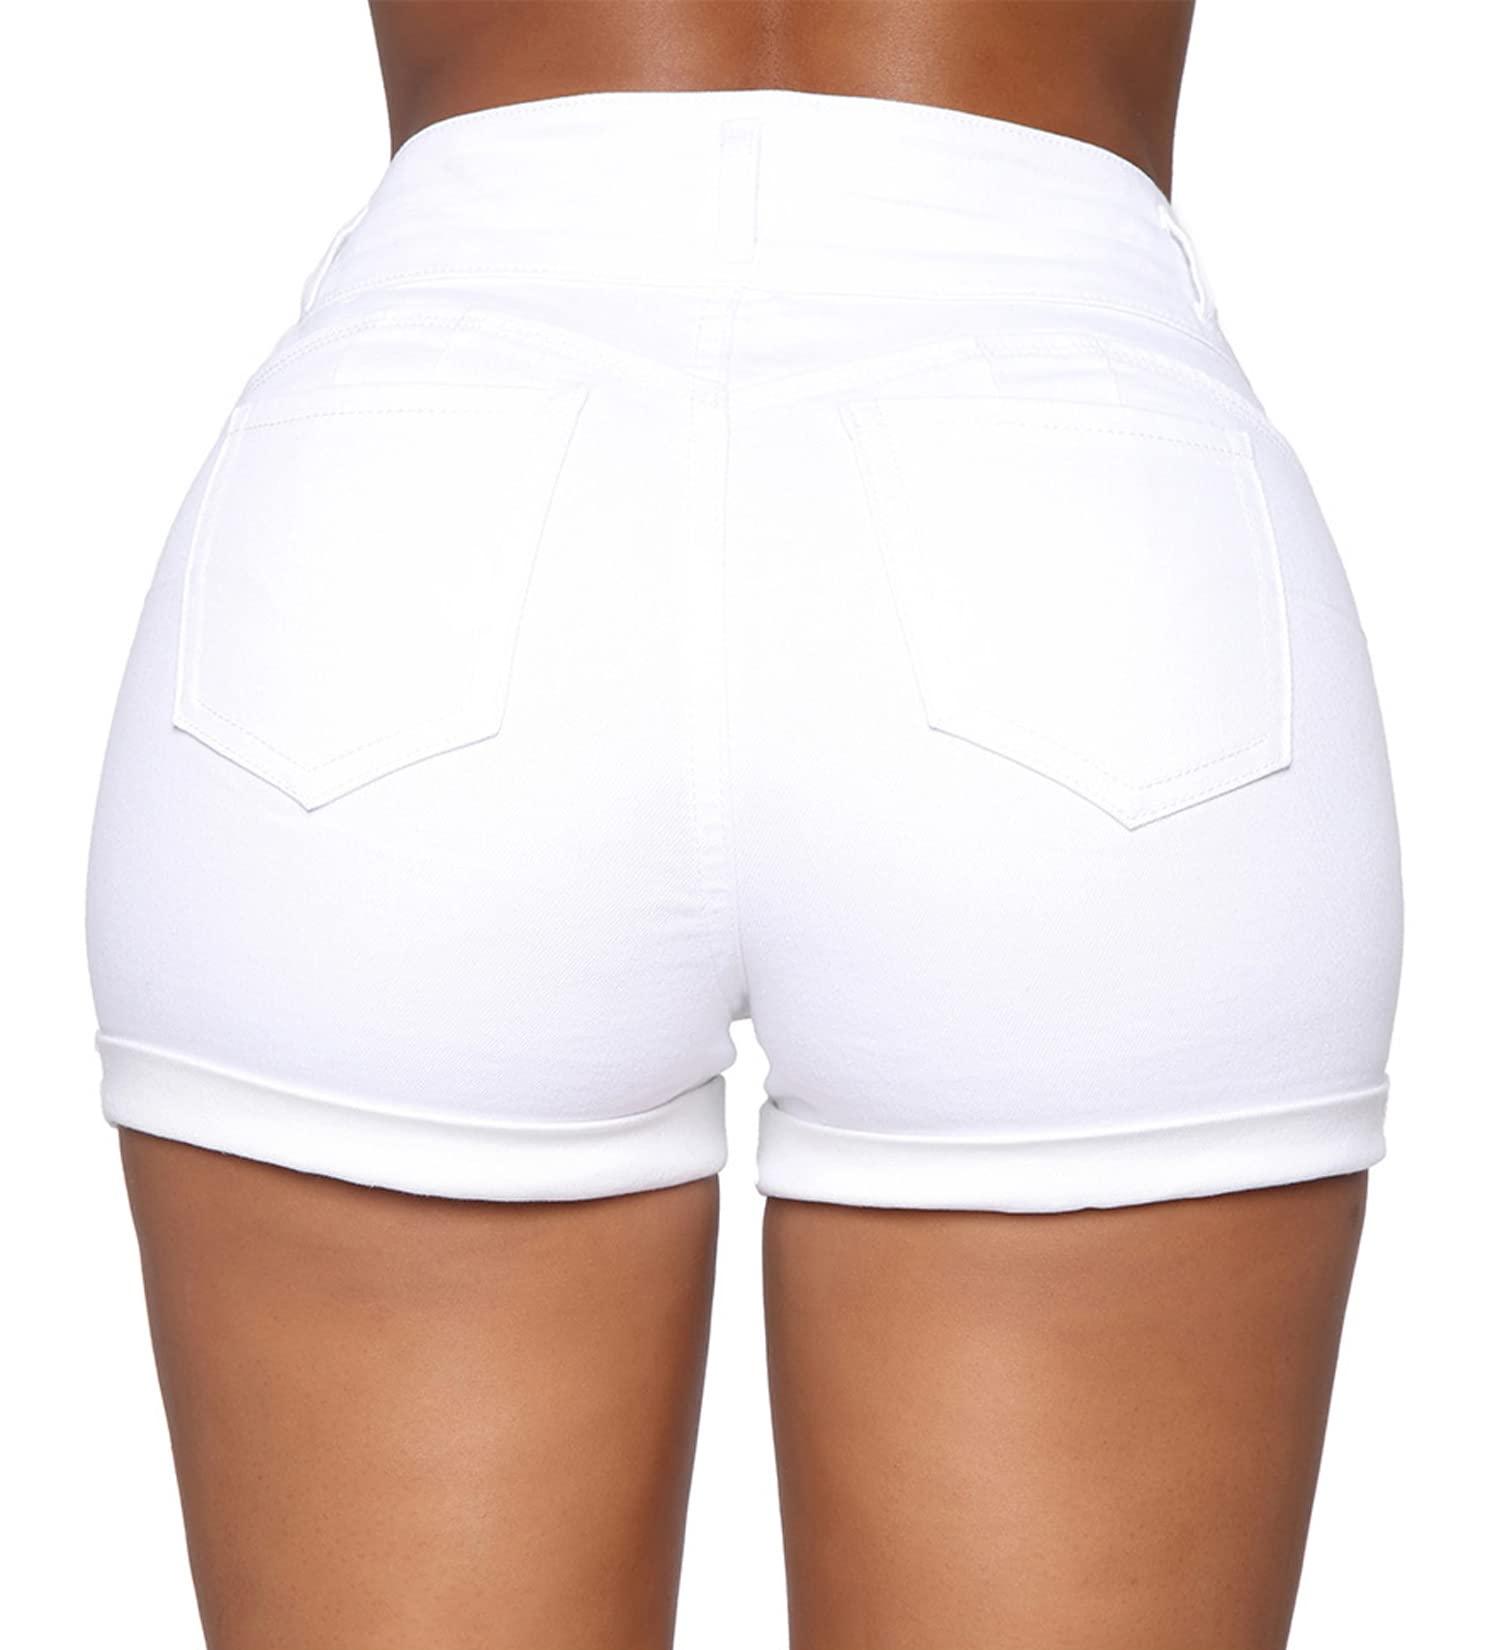 Romastory Womens High Waisted Jean Shorts Comfy Stretchy Workout Denim Shorts for Women (Large, White) - Bona Fide Fashion